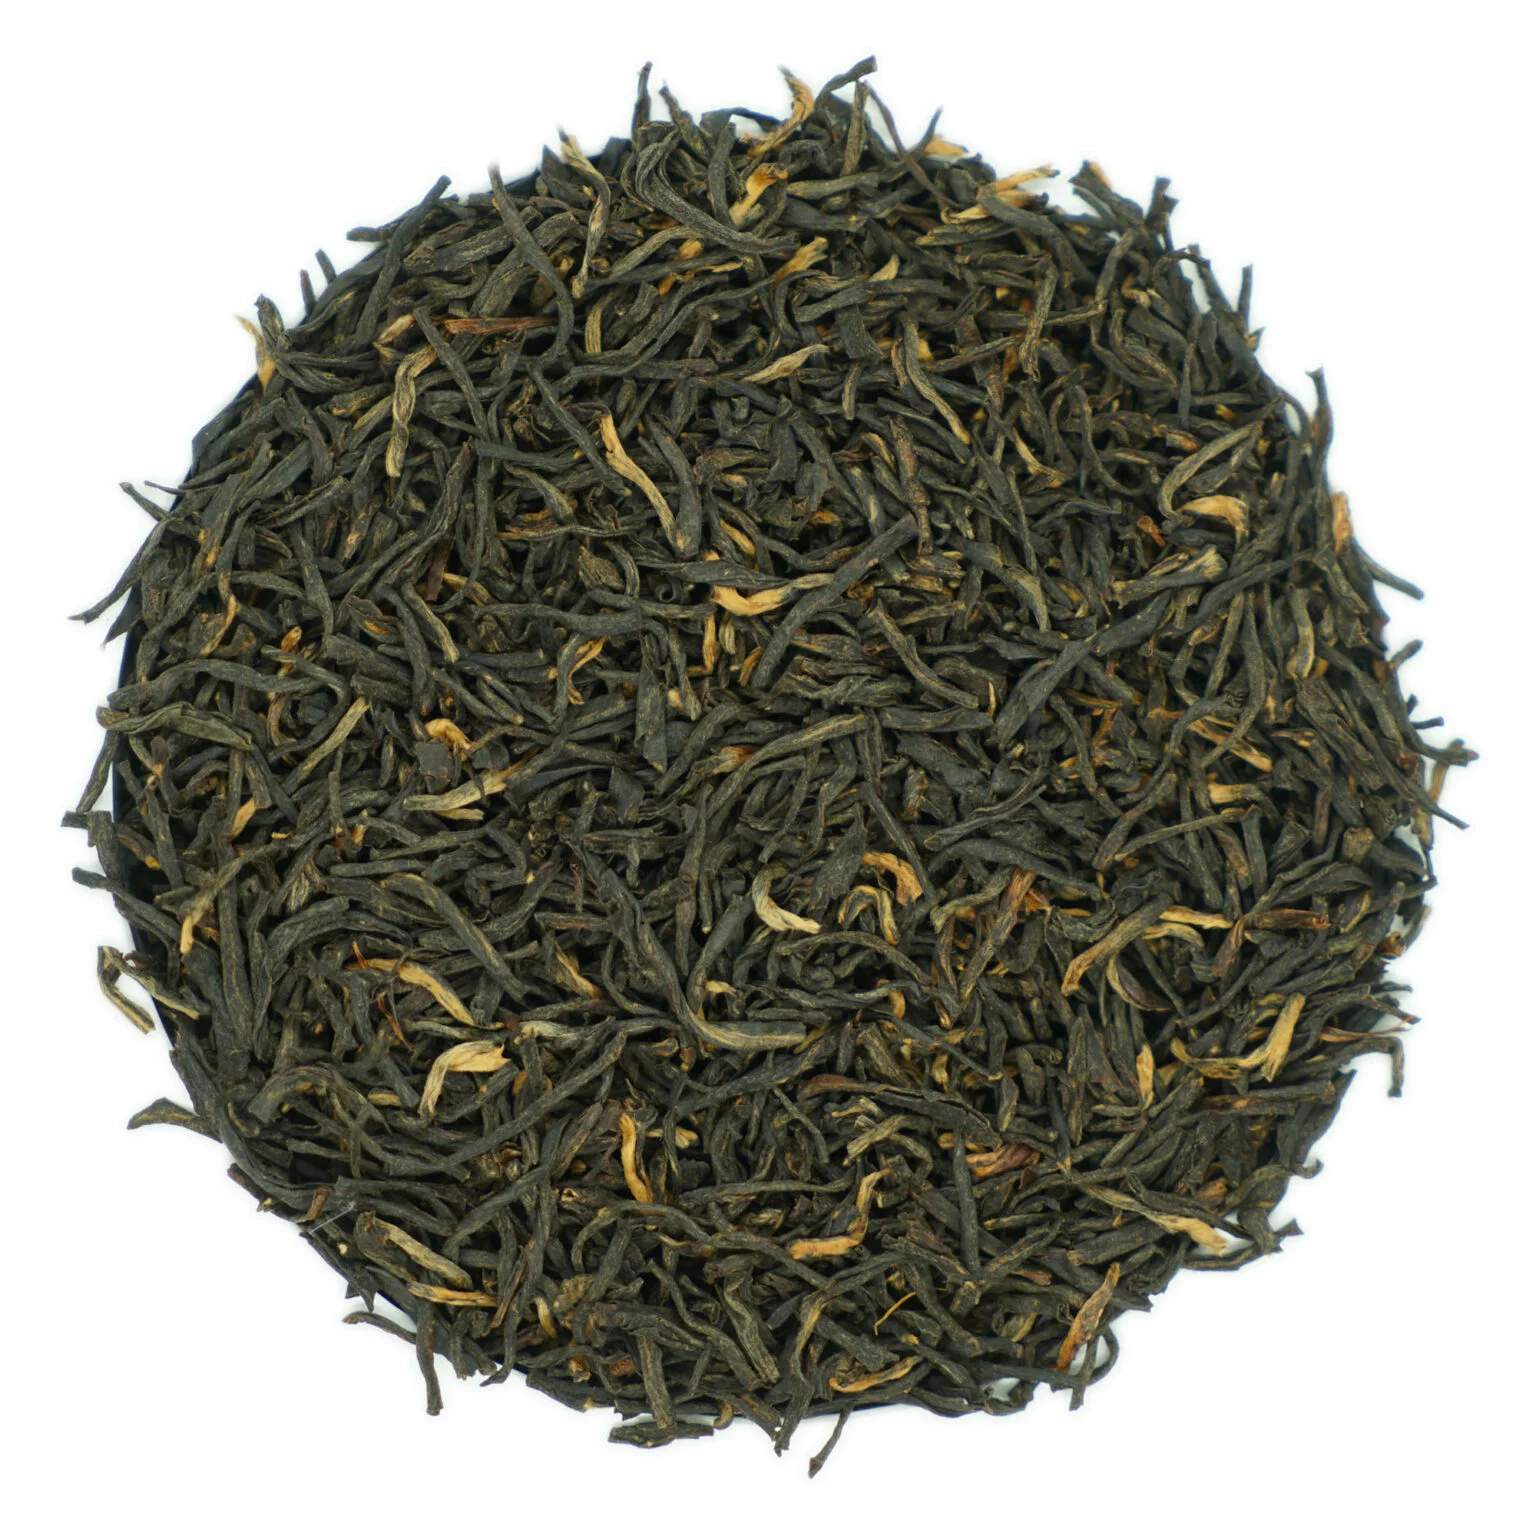 Herbata Assam Halmari - Wyjątkowy smak i aromat z ogrodu Halmari